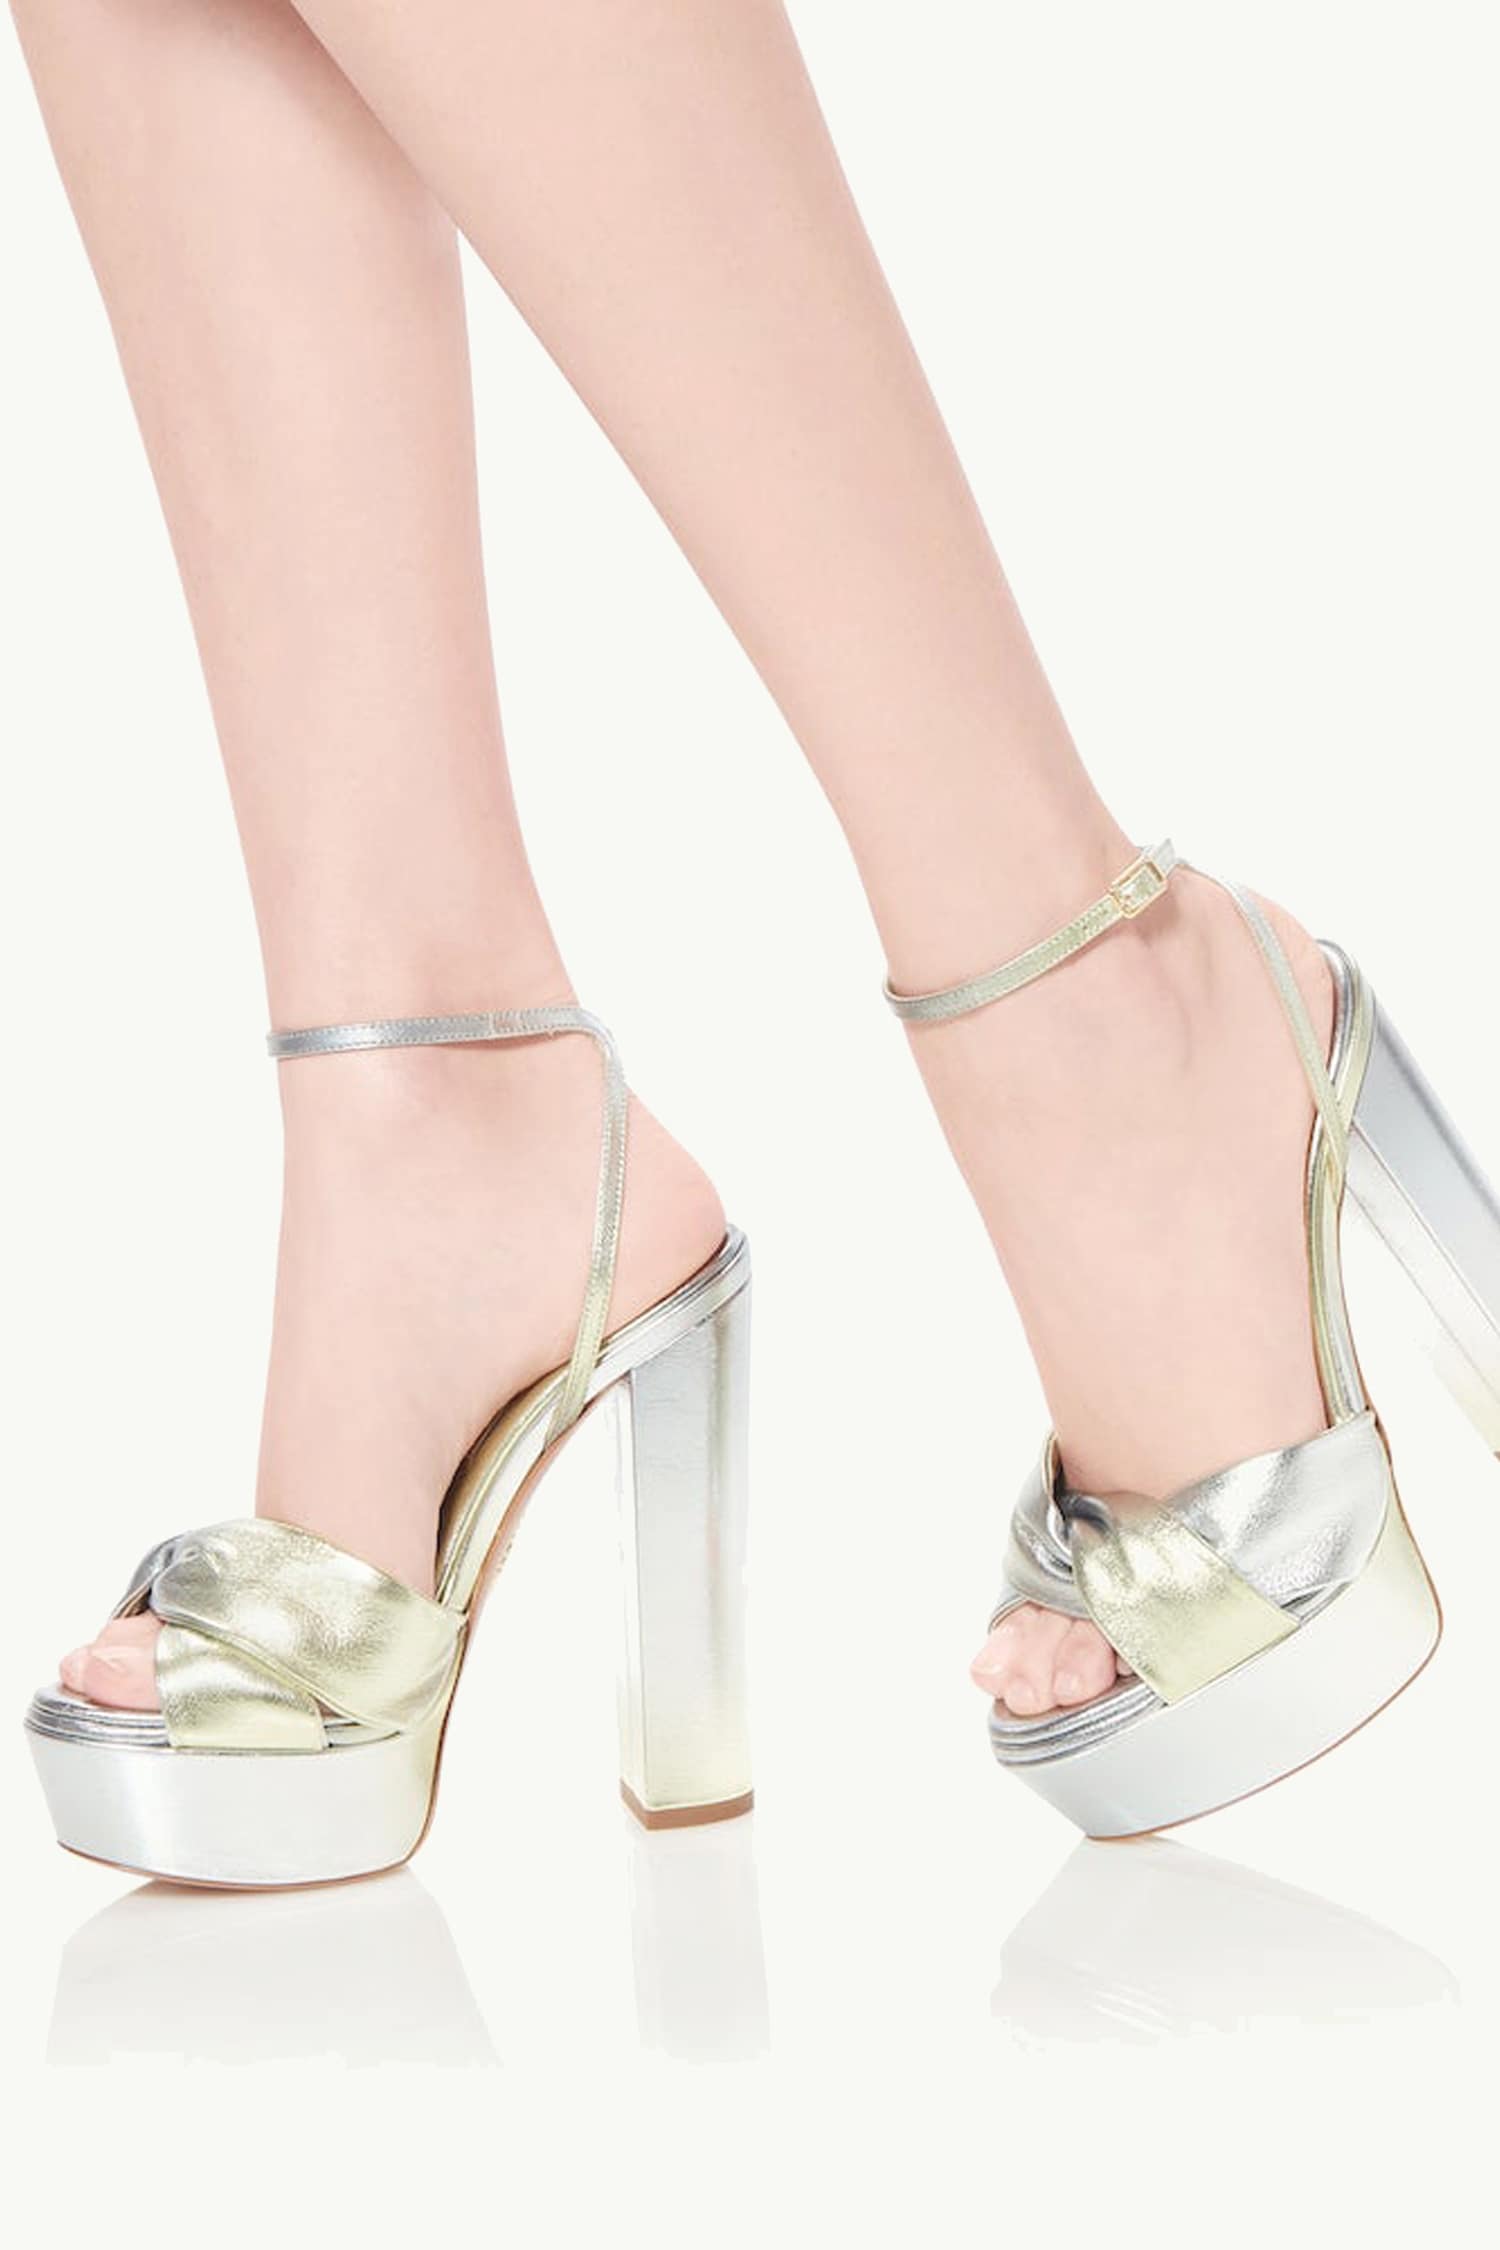 Buy Shoetopia Stylish Braid Style Strap Cream Platform Heels for Women &  Girls /UK2 at Amazon.in